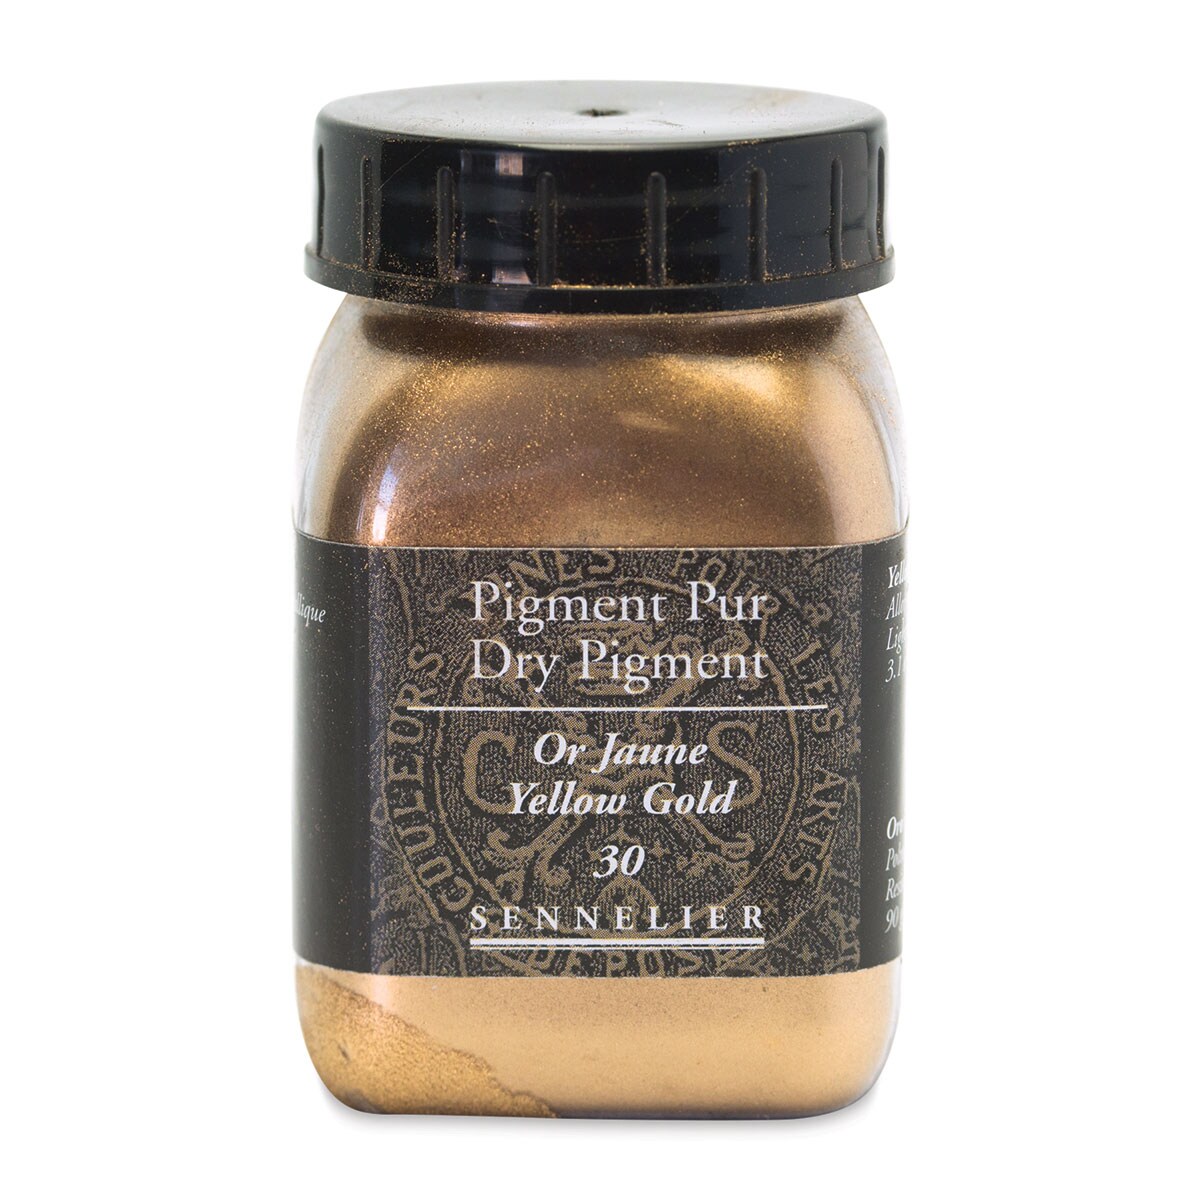 Sennelier Dry Pigment - Yellow Gold, 90 g jar